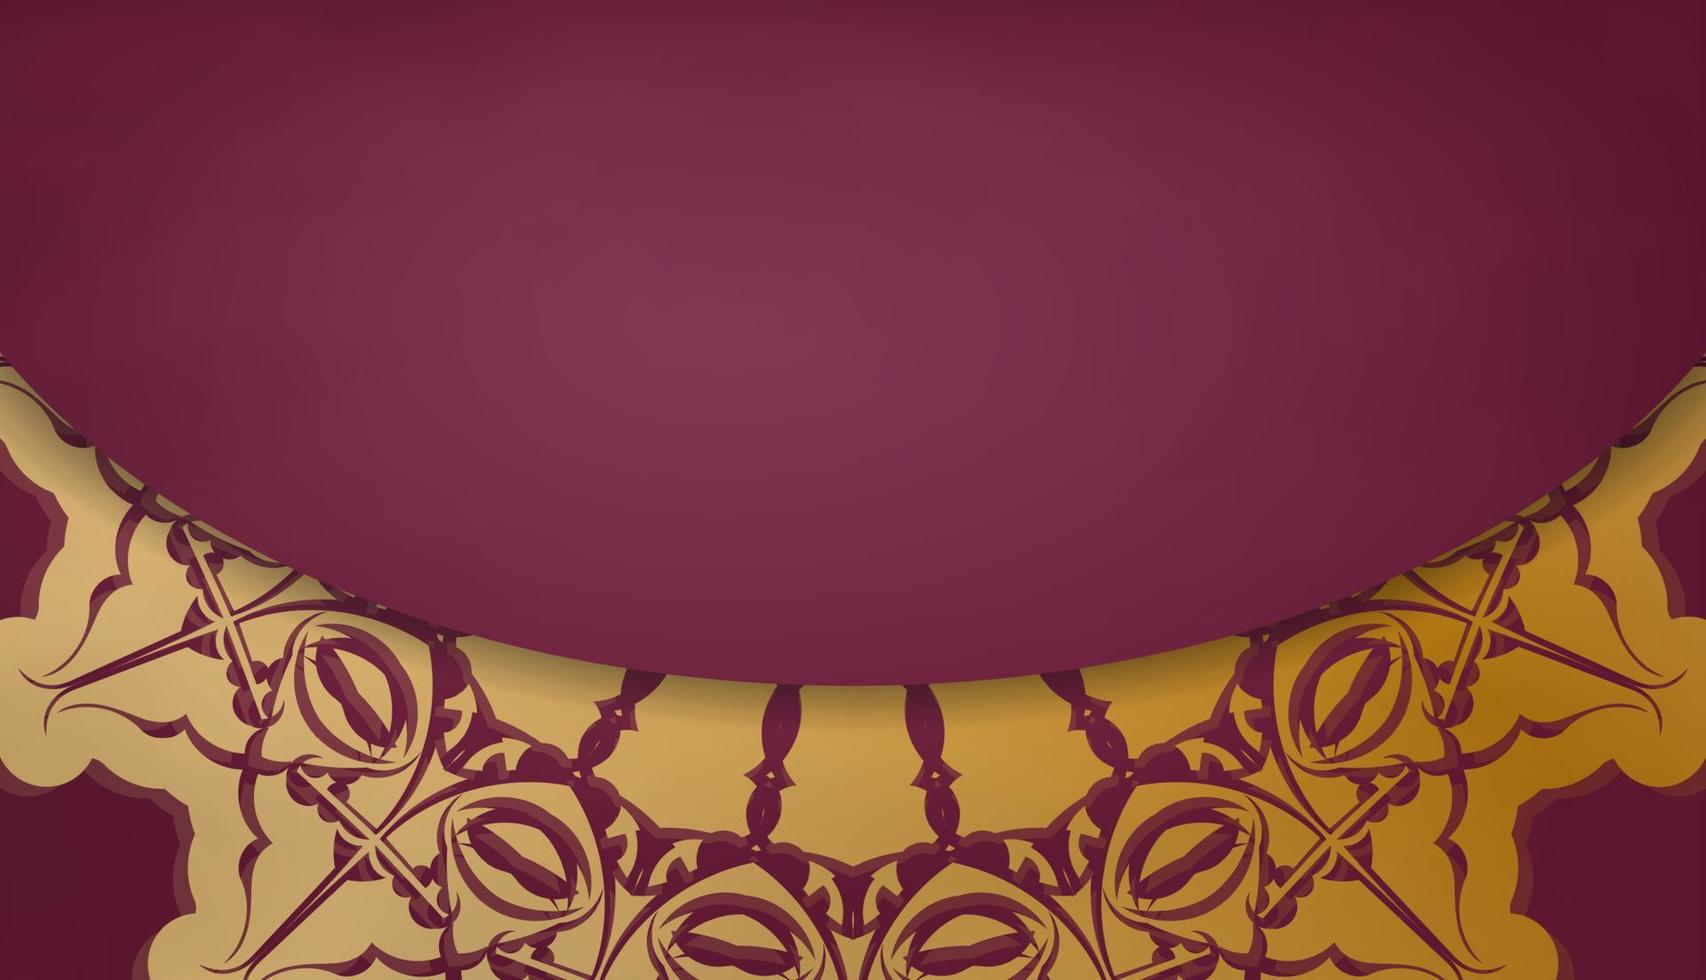 Burgundy banner with mandala gold pattern for logo design vector